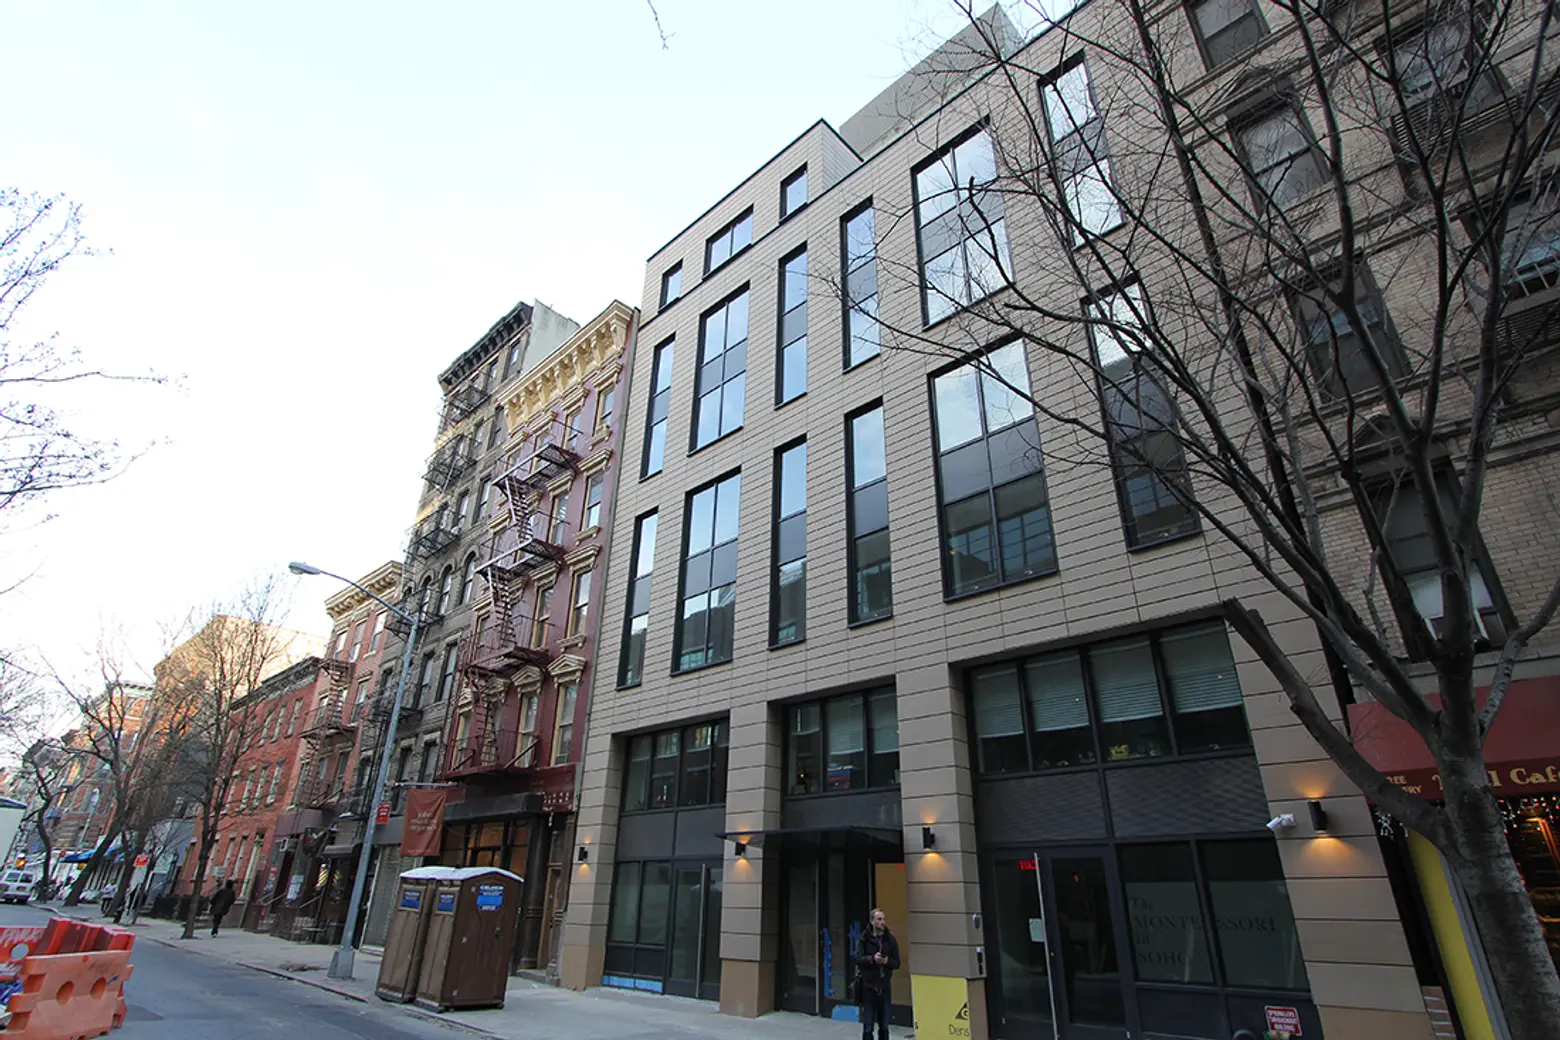 75 SUllivan Street, 73 Sullivan Street, SoHo rentals, NYC apartments